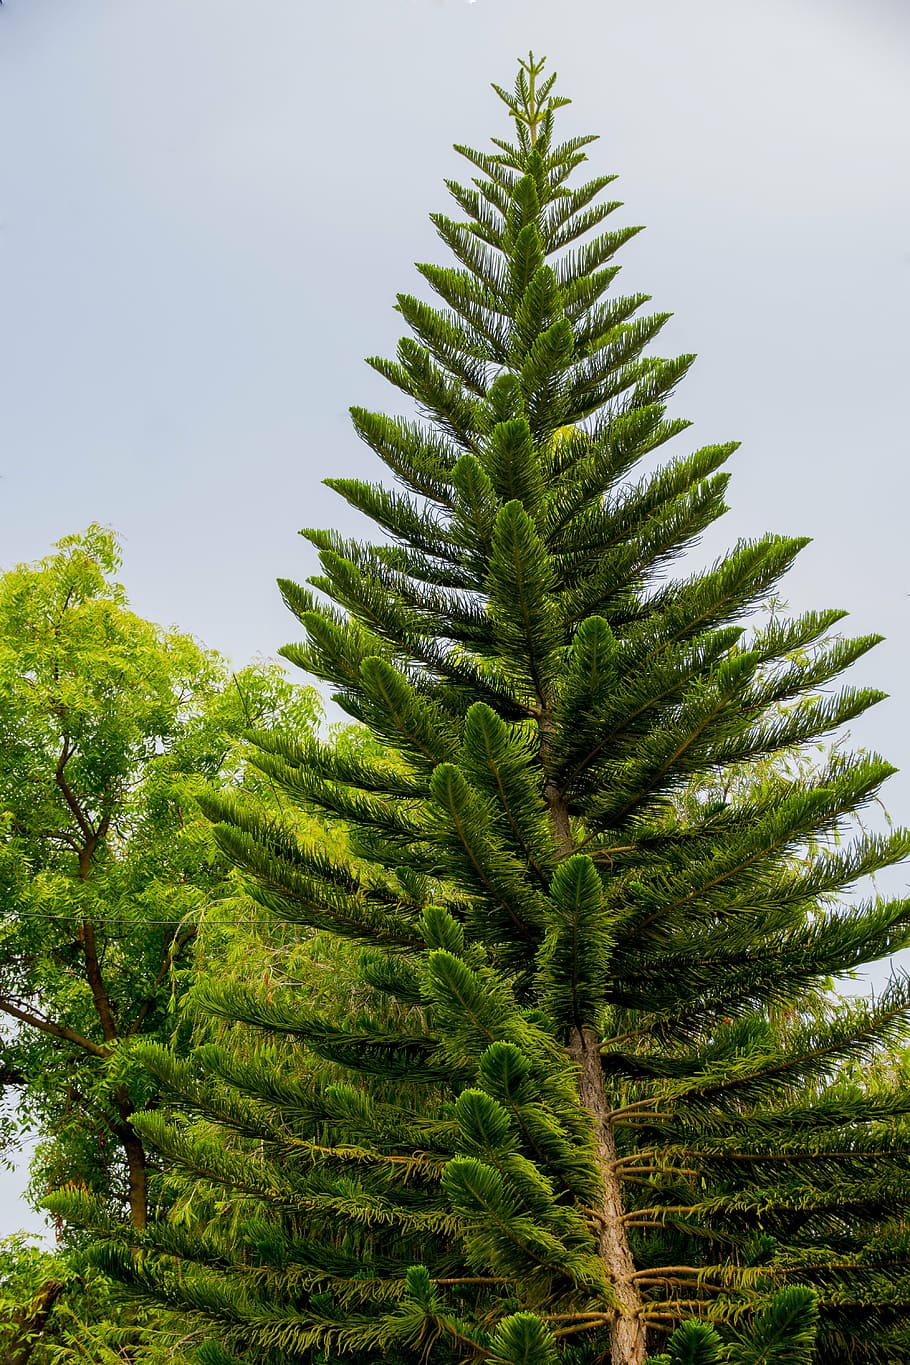 bangalore, conífera, vista de ojo de pez, árbol, naturaleza, bosque, color verde, pino, árbol de hoja perenne, al aire libre